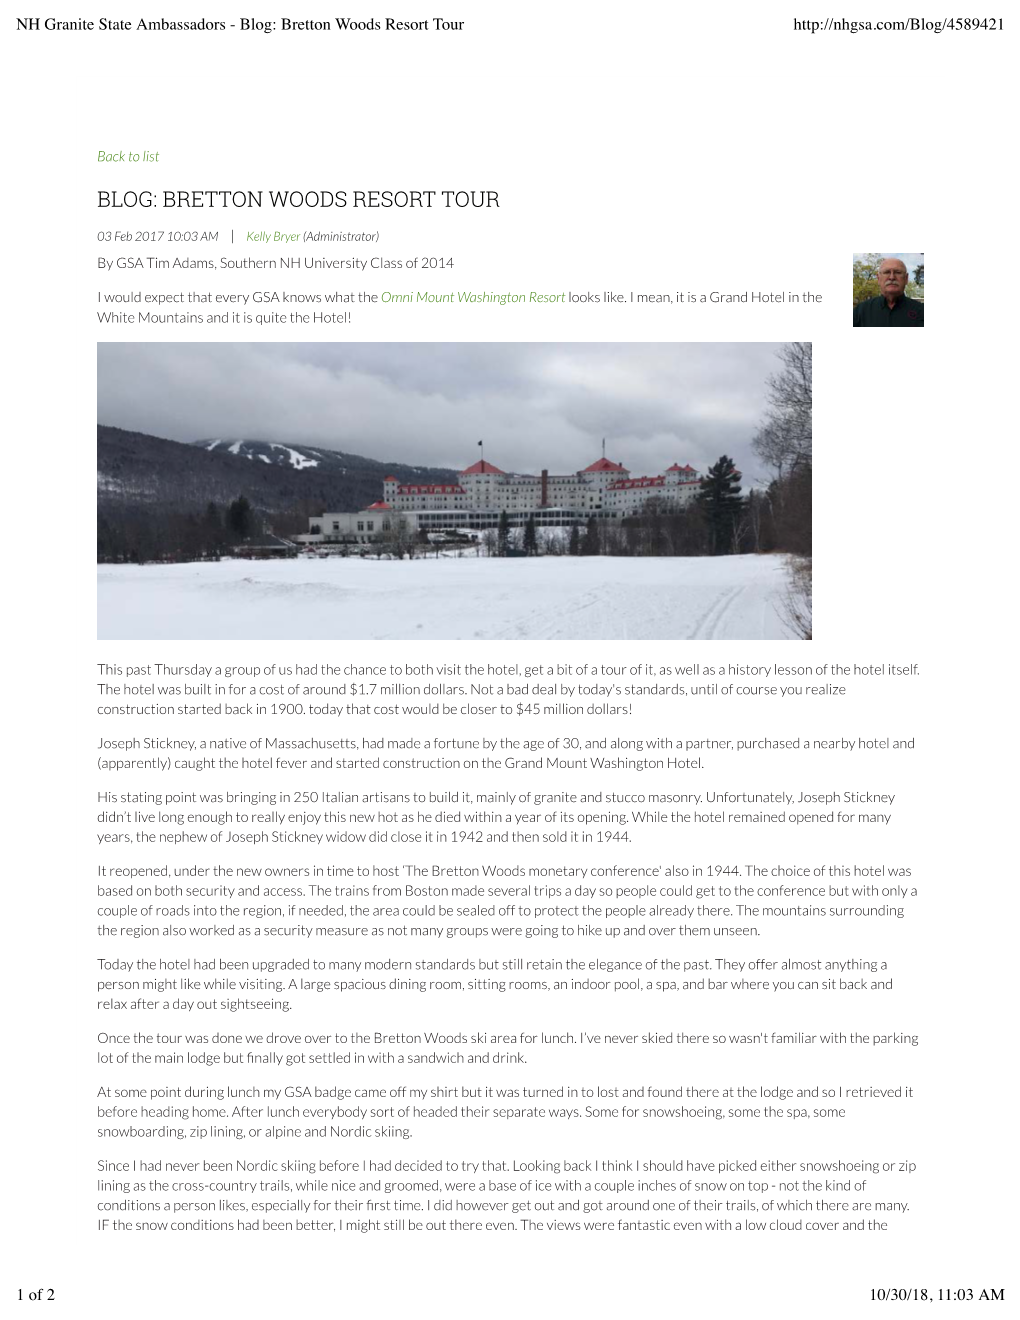 Blog: Bretton Woods Resort Tour